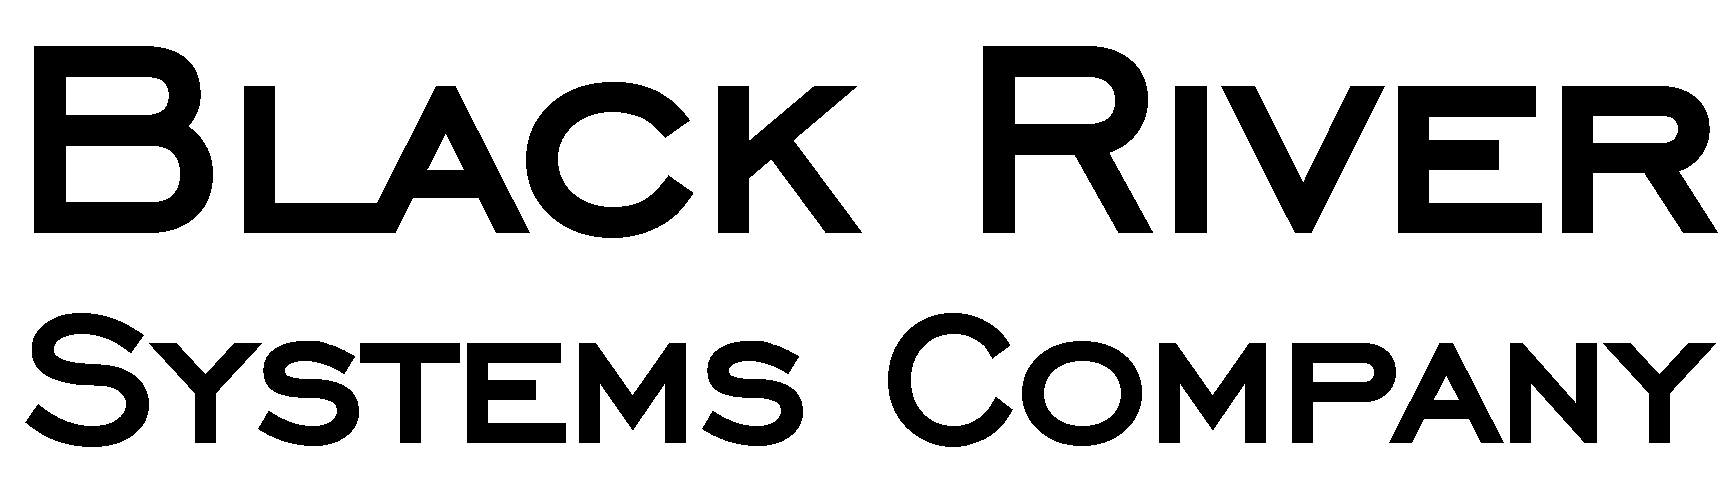 Black River Systems Company, Inc.